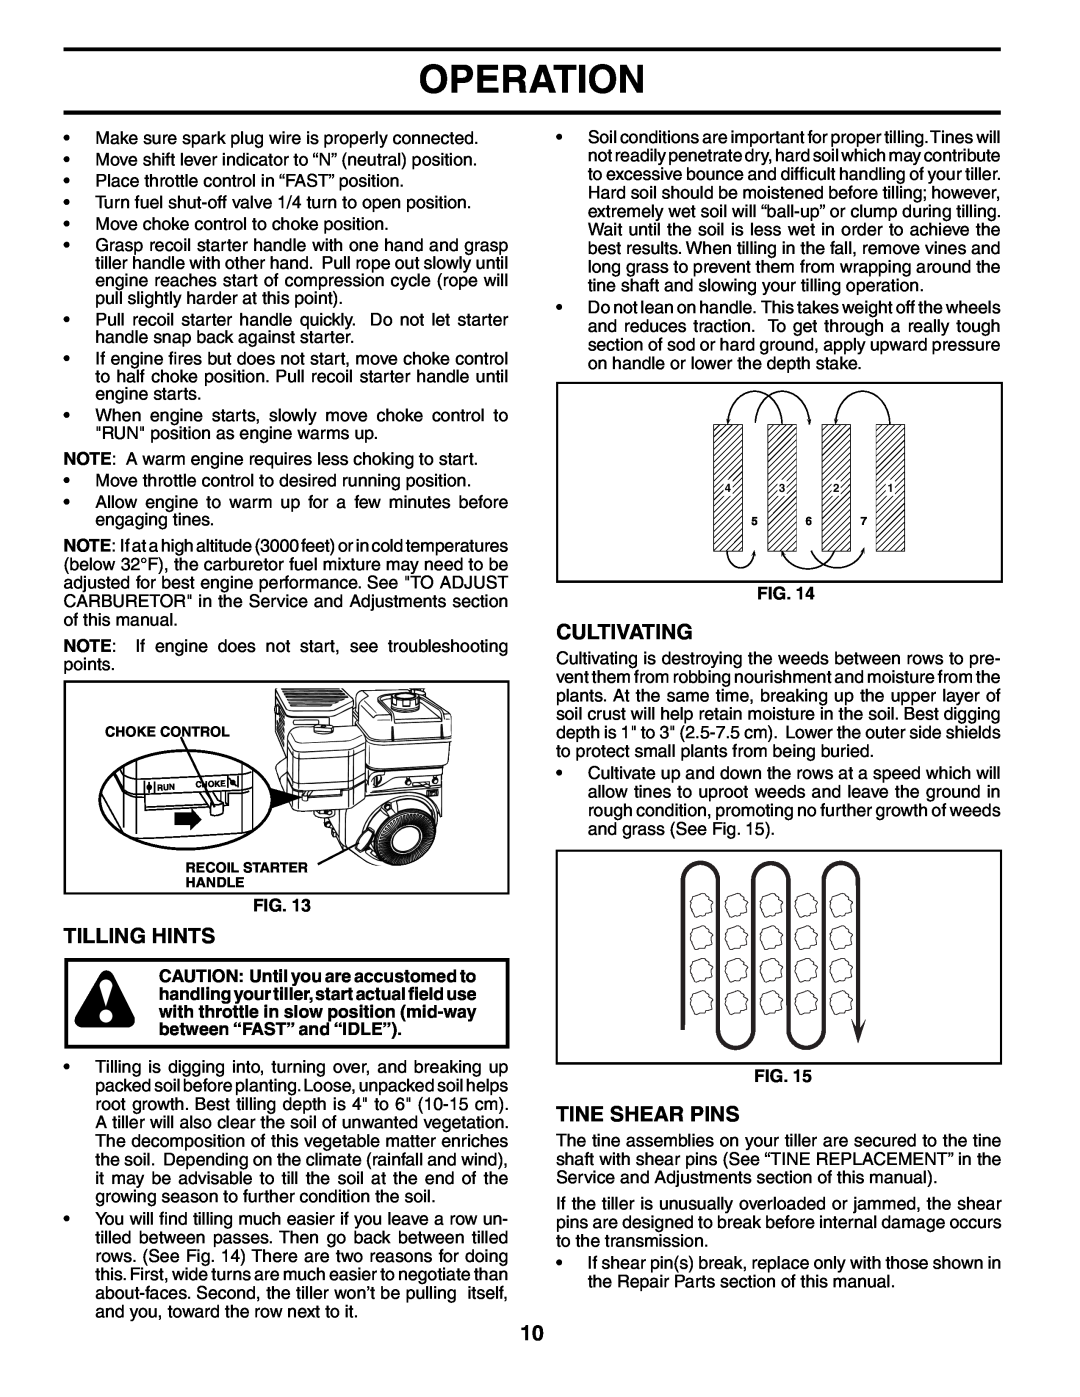 Poulan PRRT65 manual Tilling Hints, Cultivating, Tine Shear Pins, Operation 